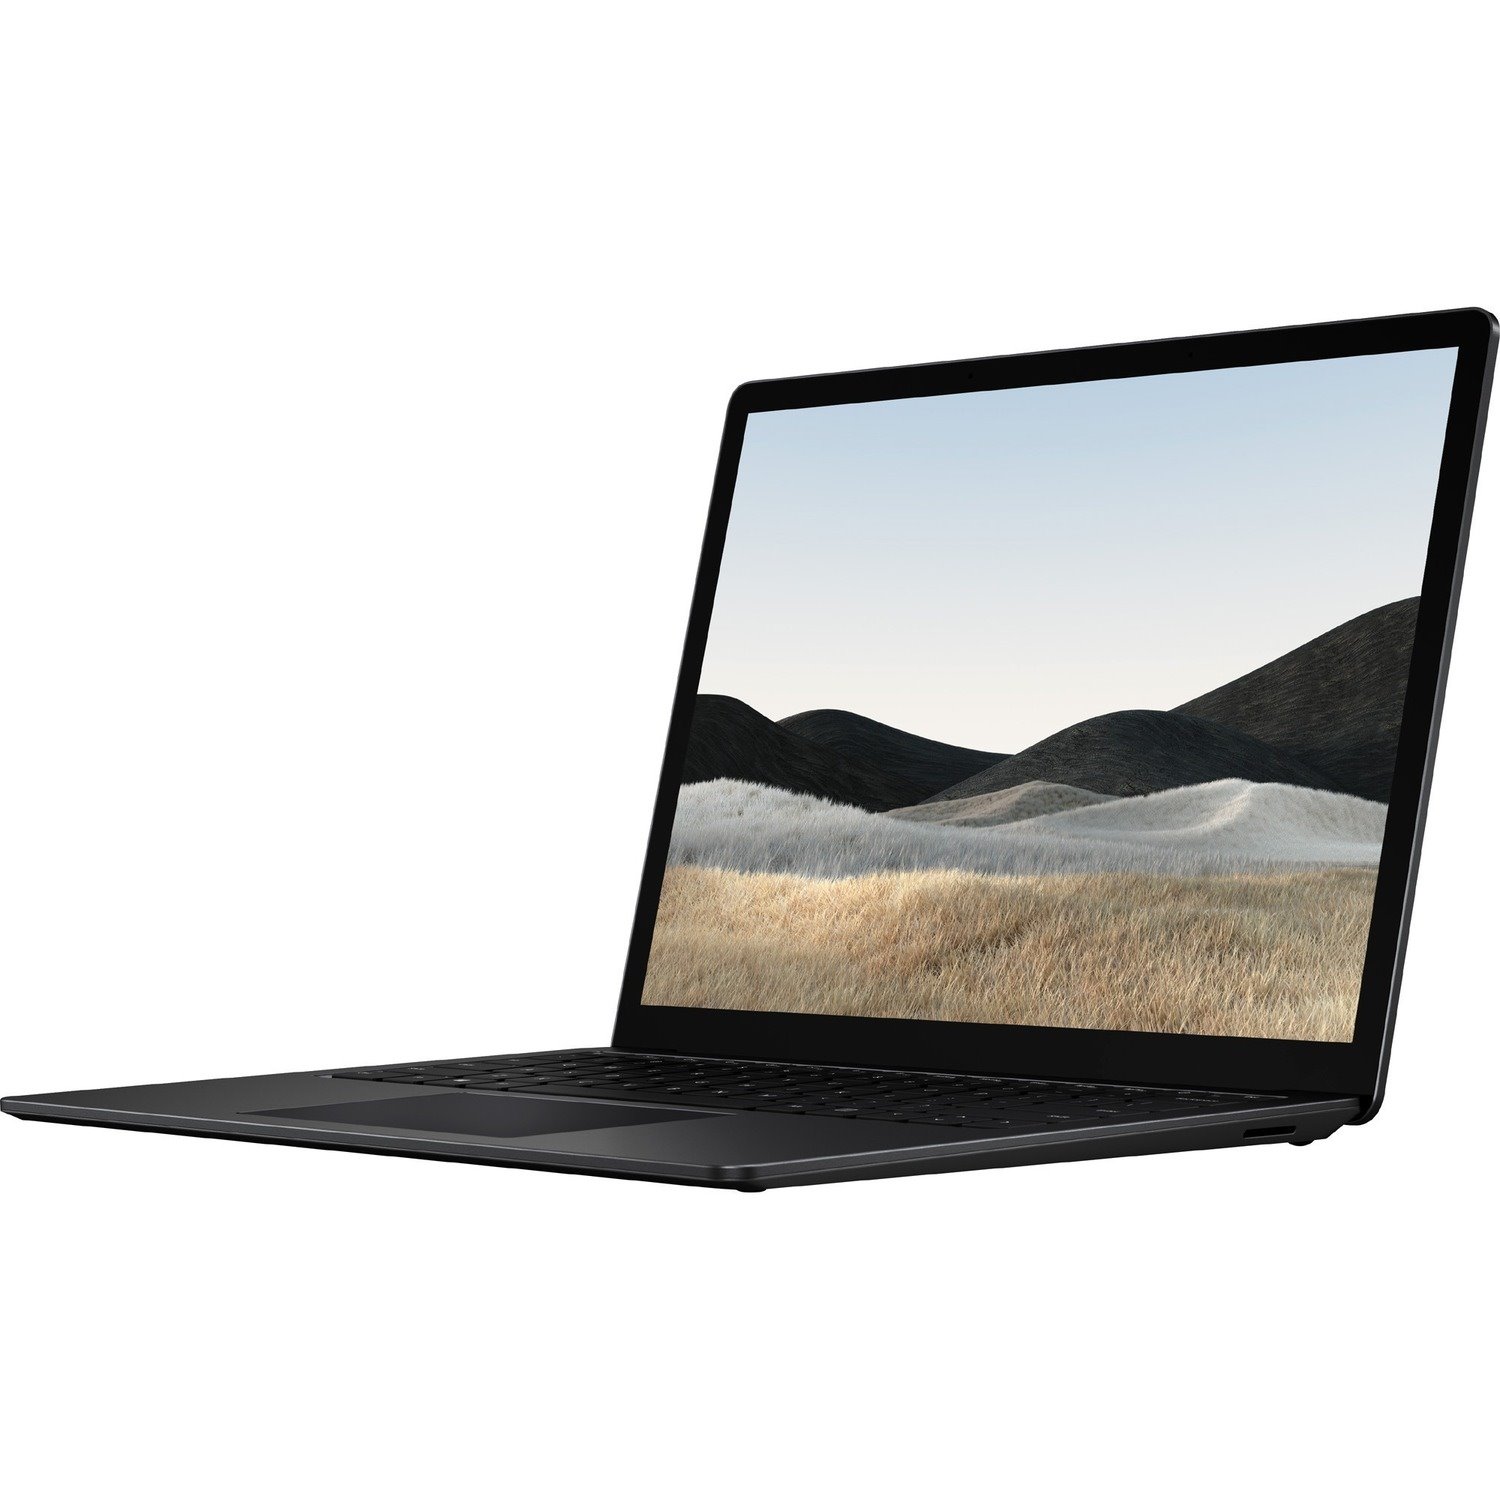 Microsoft Surface Laptop 4 13.5" Touchscreen Notebook - Intel Core i7 - 16 GB - 256 GB SSD - Matt Black